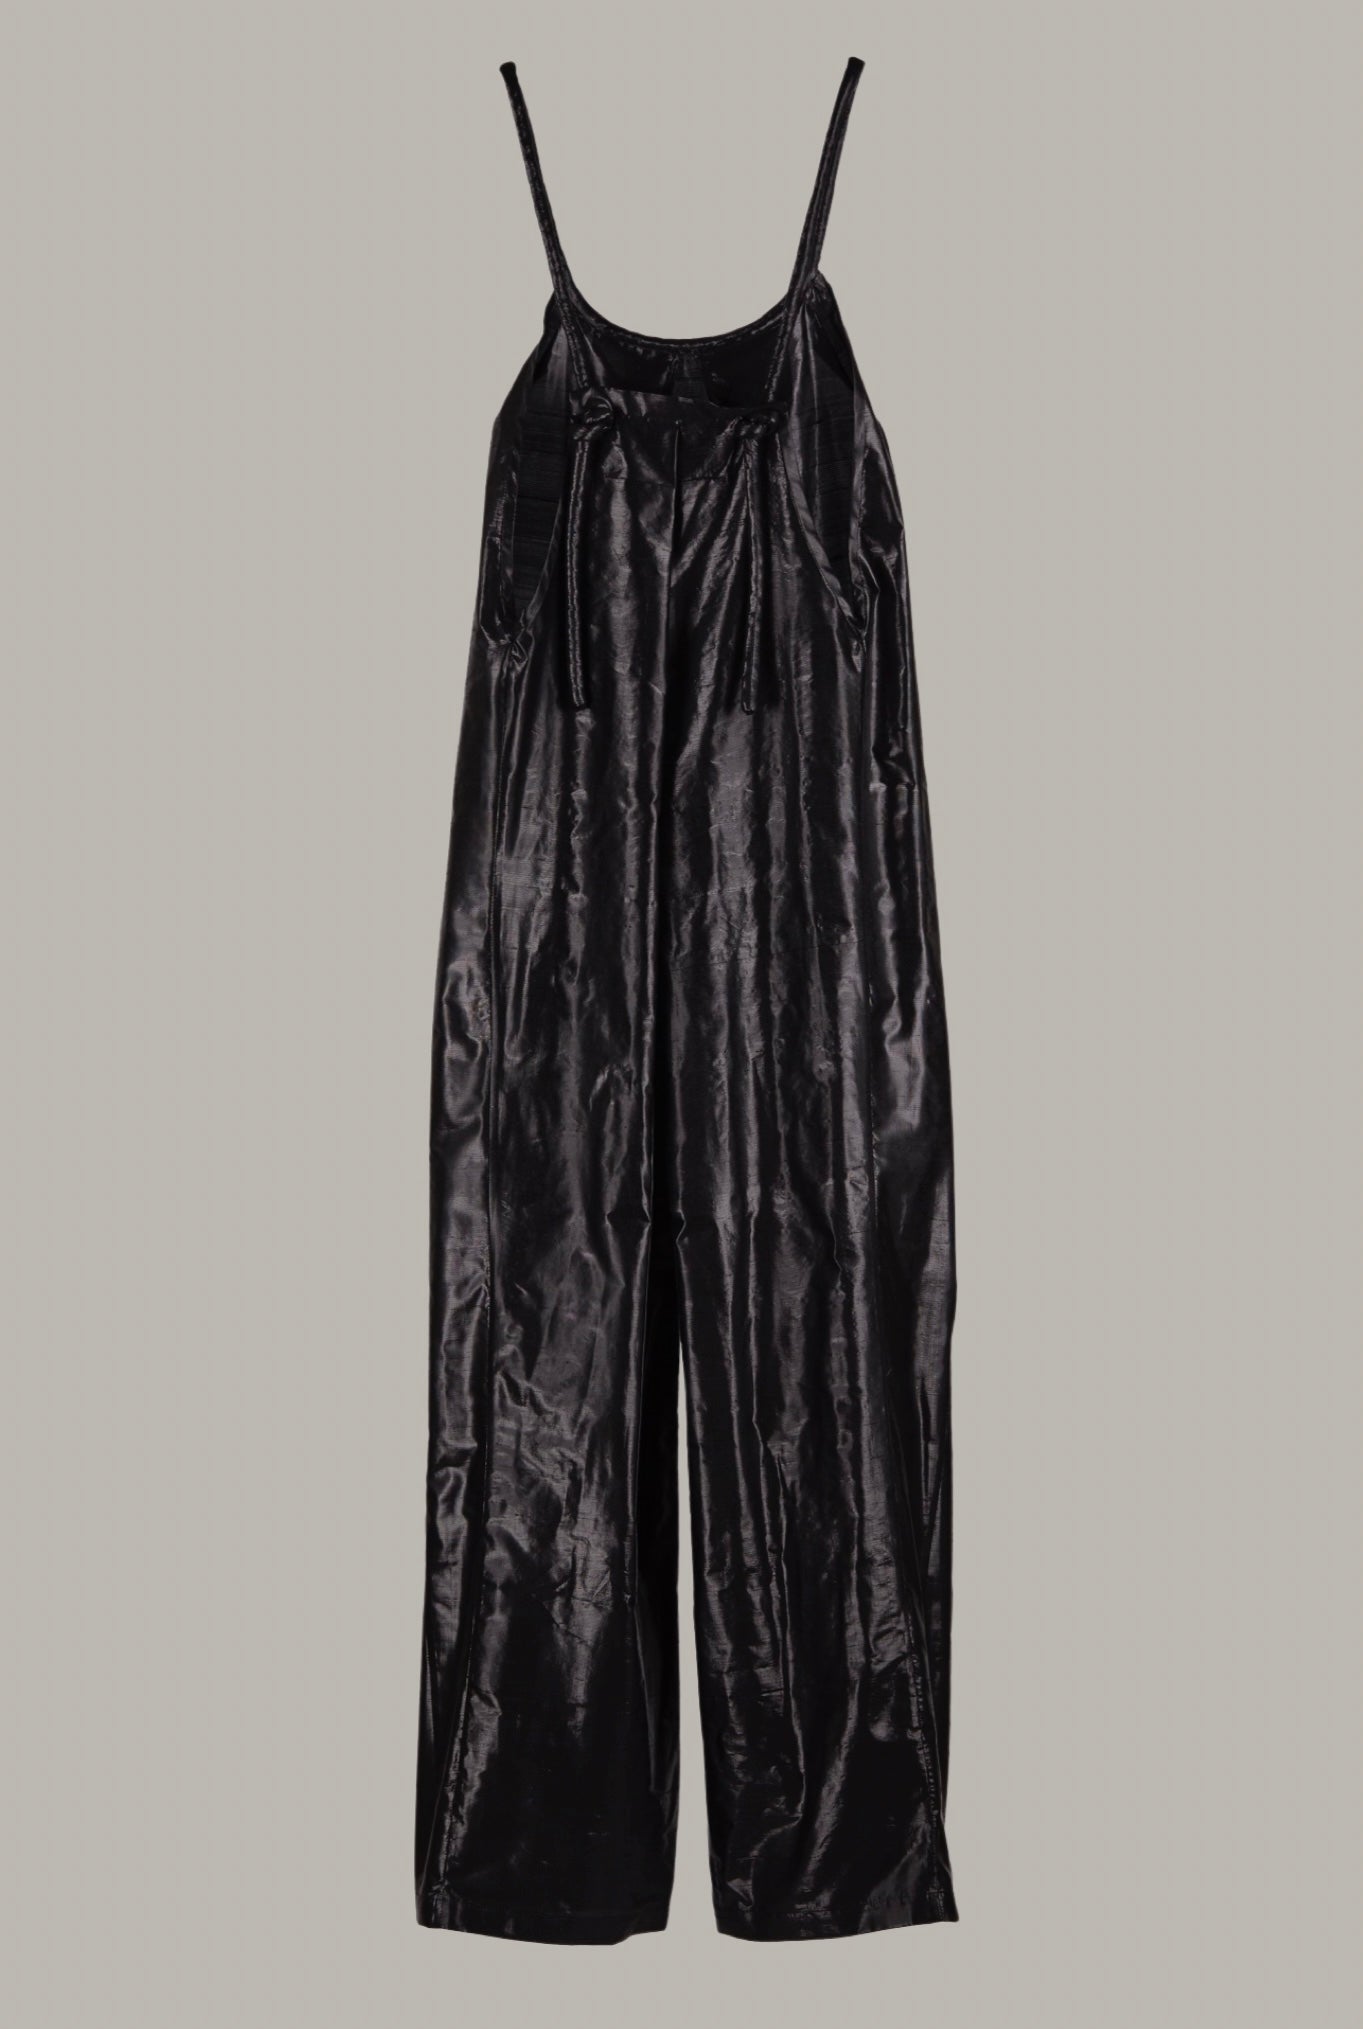 Swanfold Jumpsuit Black Onyx Metallic Silk {Made to Order}